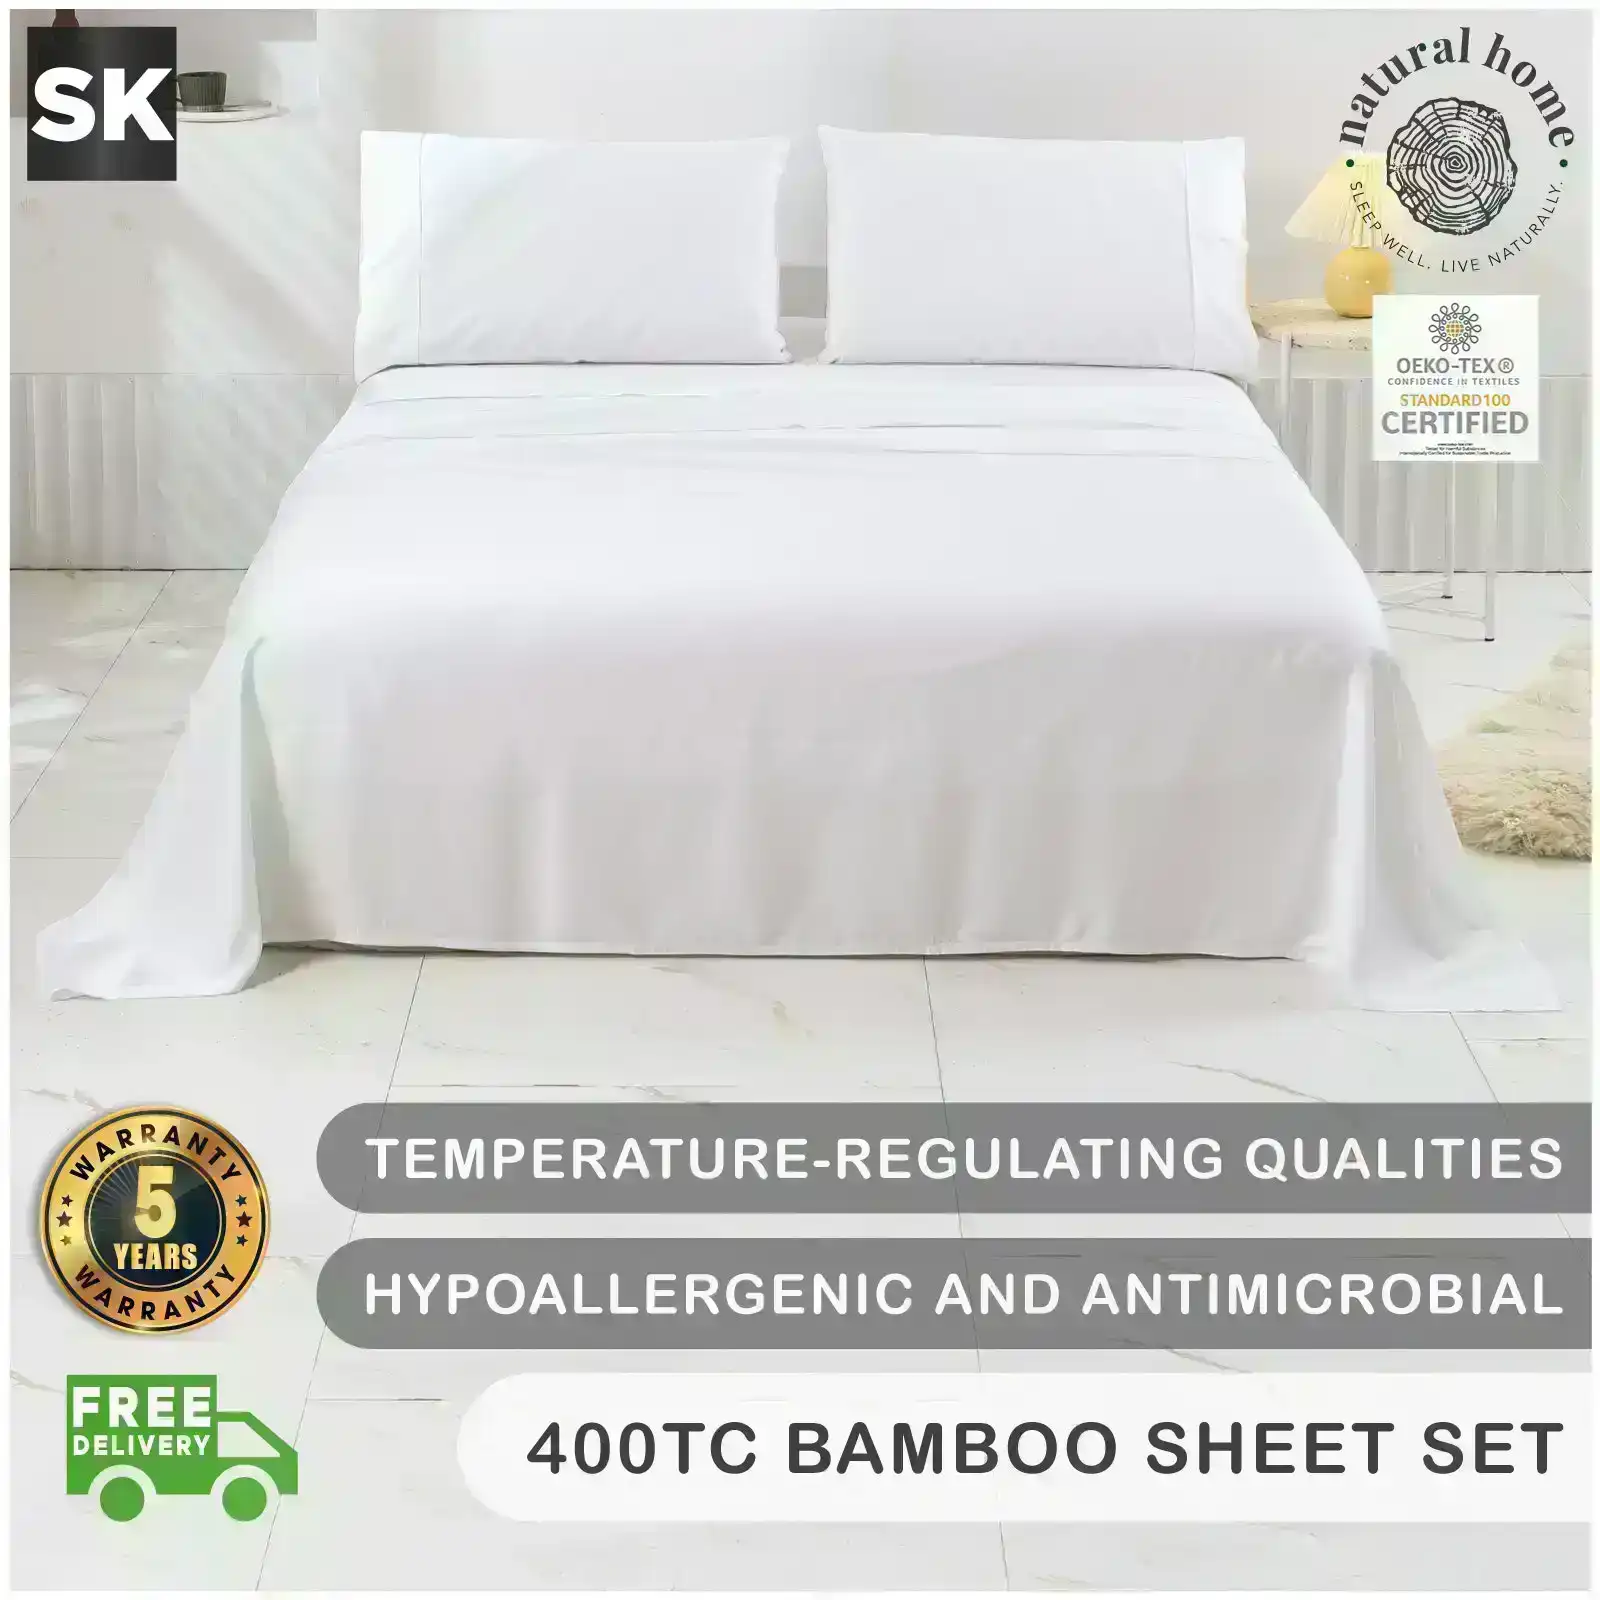 Natural Home Bamboo Sheet Set White Super King Bed